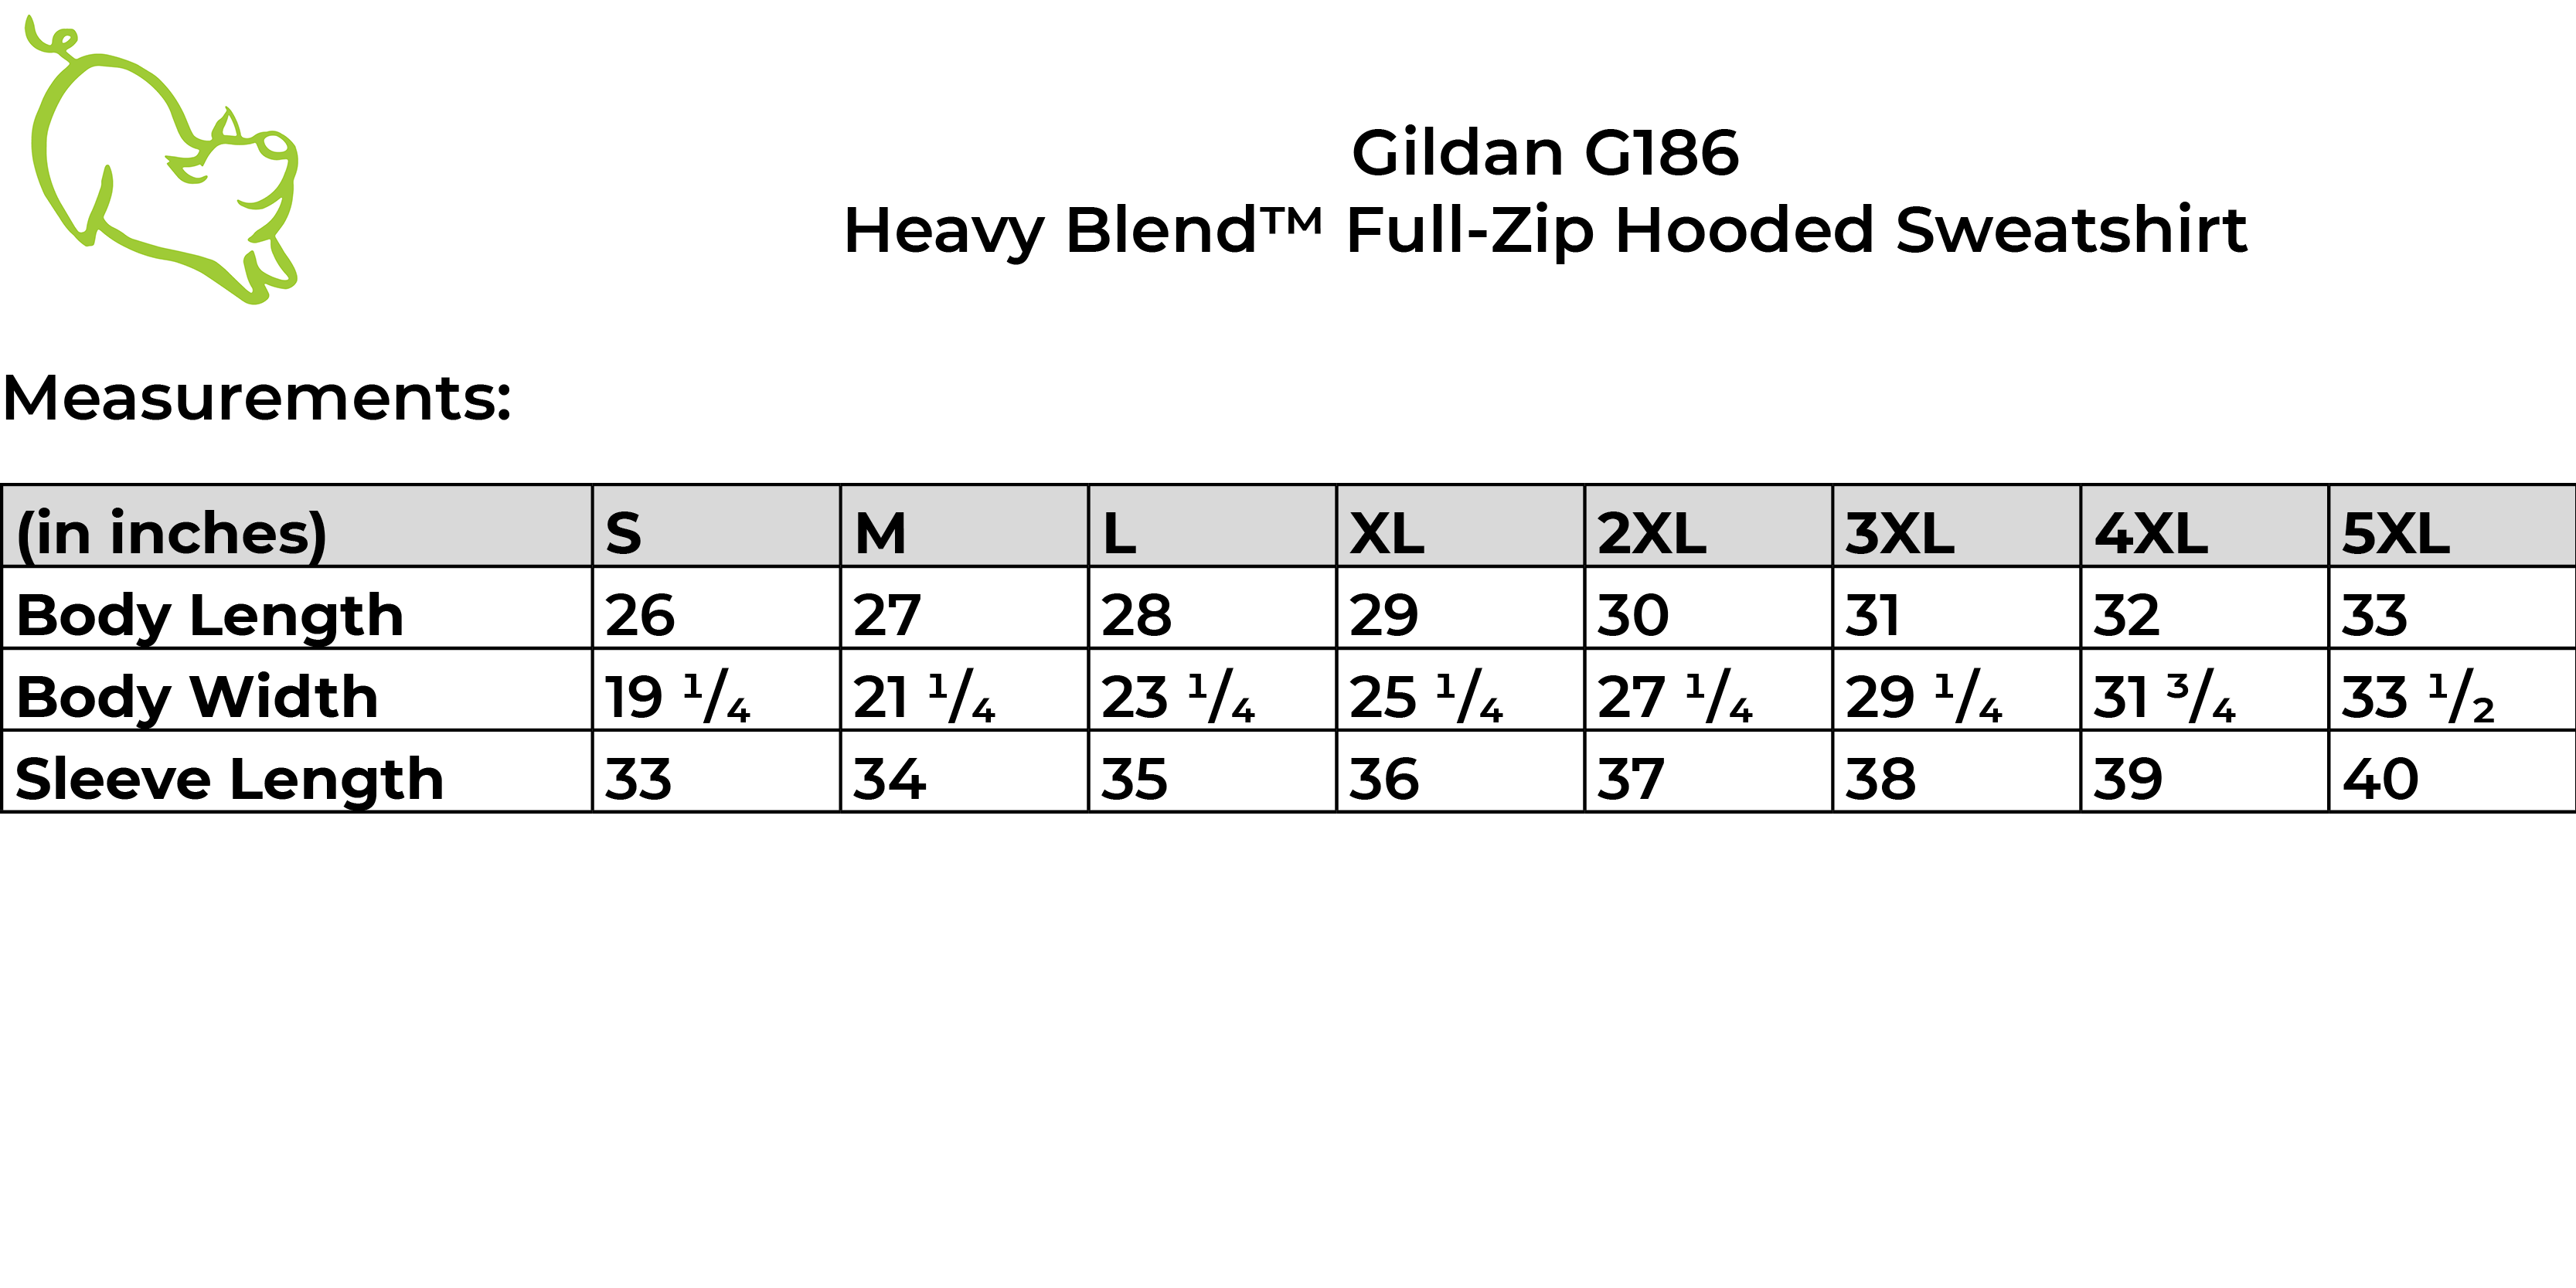 Gildan G186 size guide